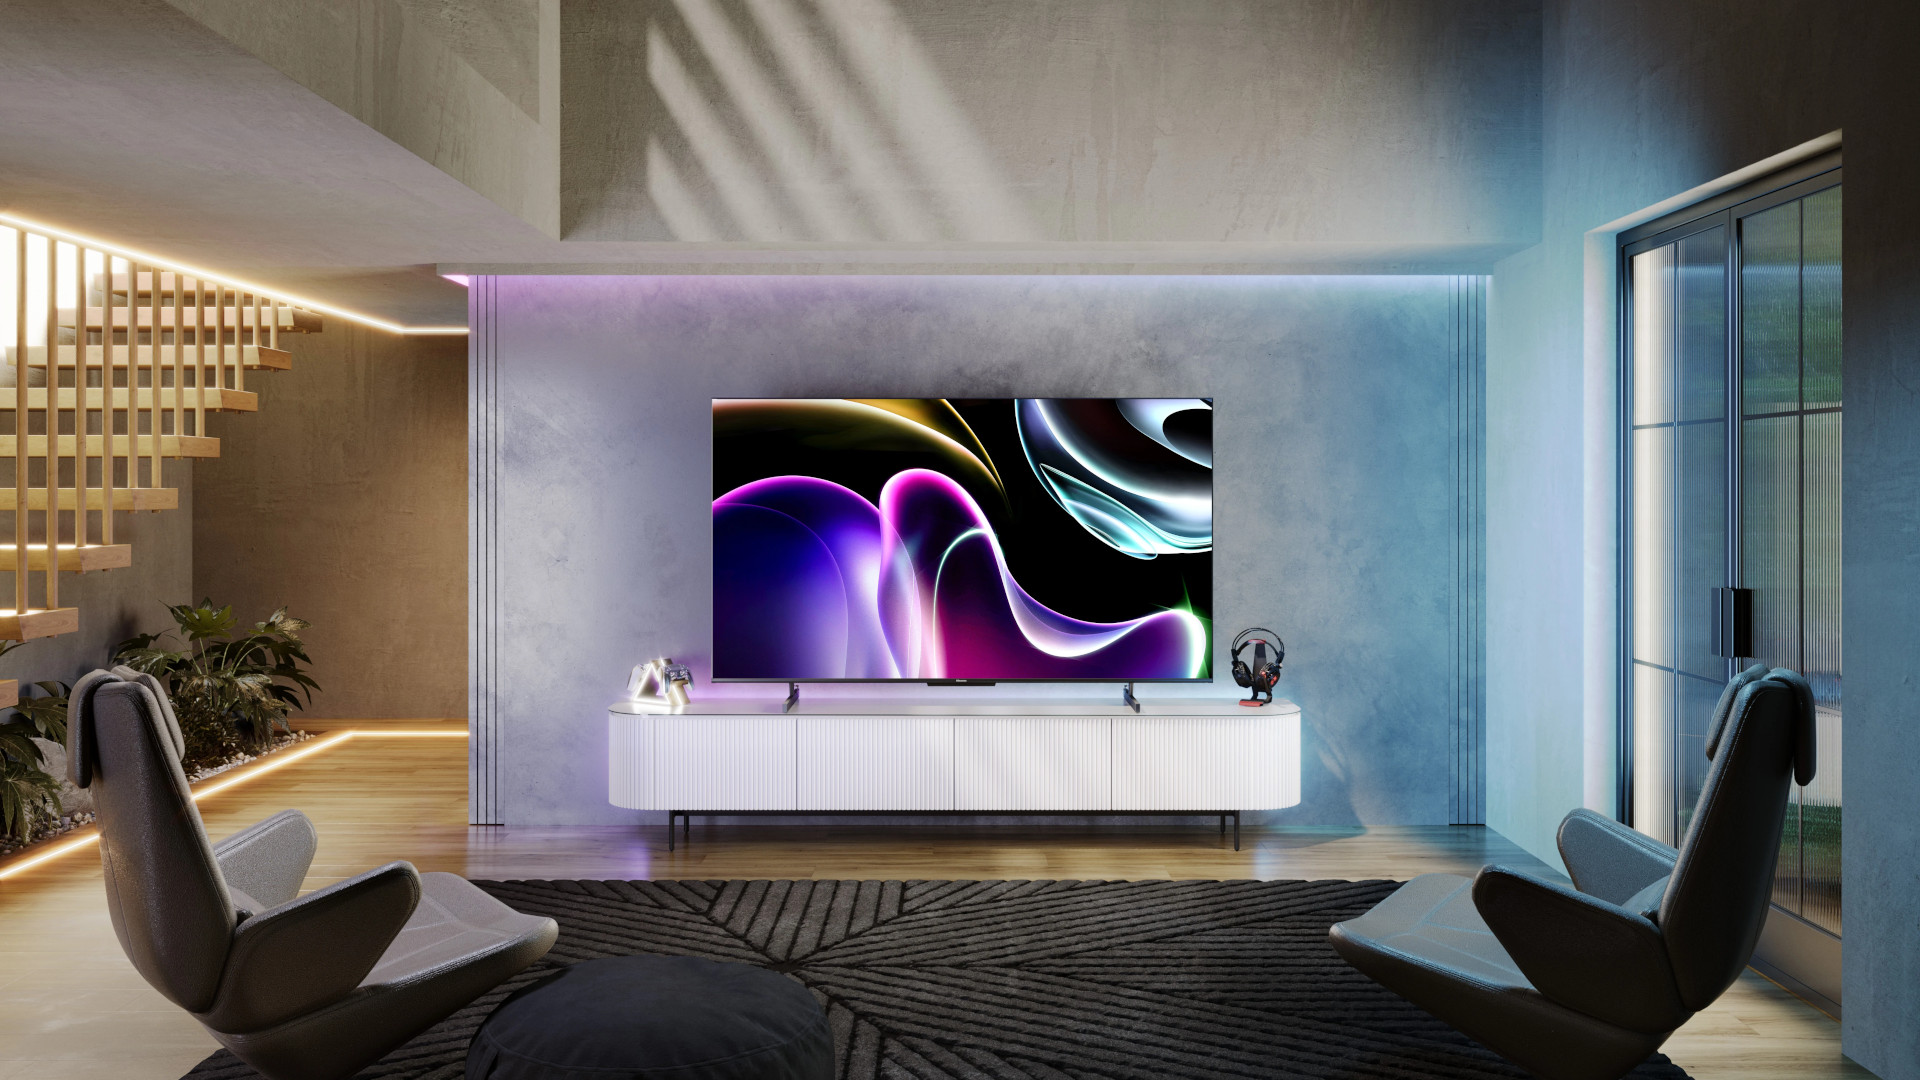 Hisense U8K Mini-LED TV on stand in living room